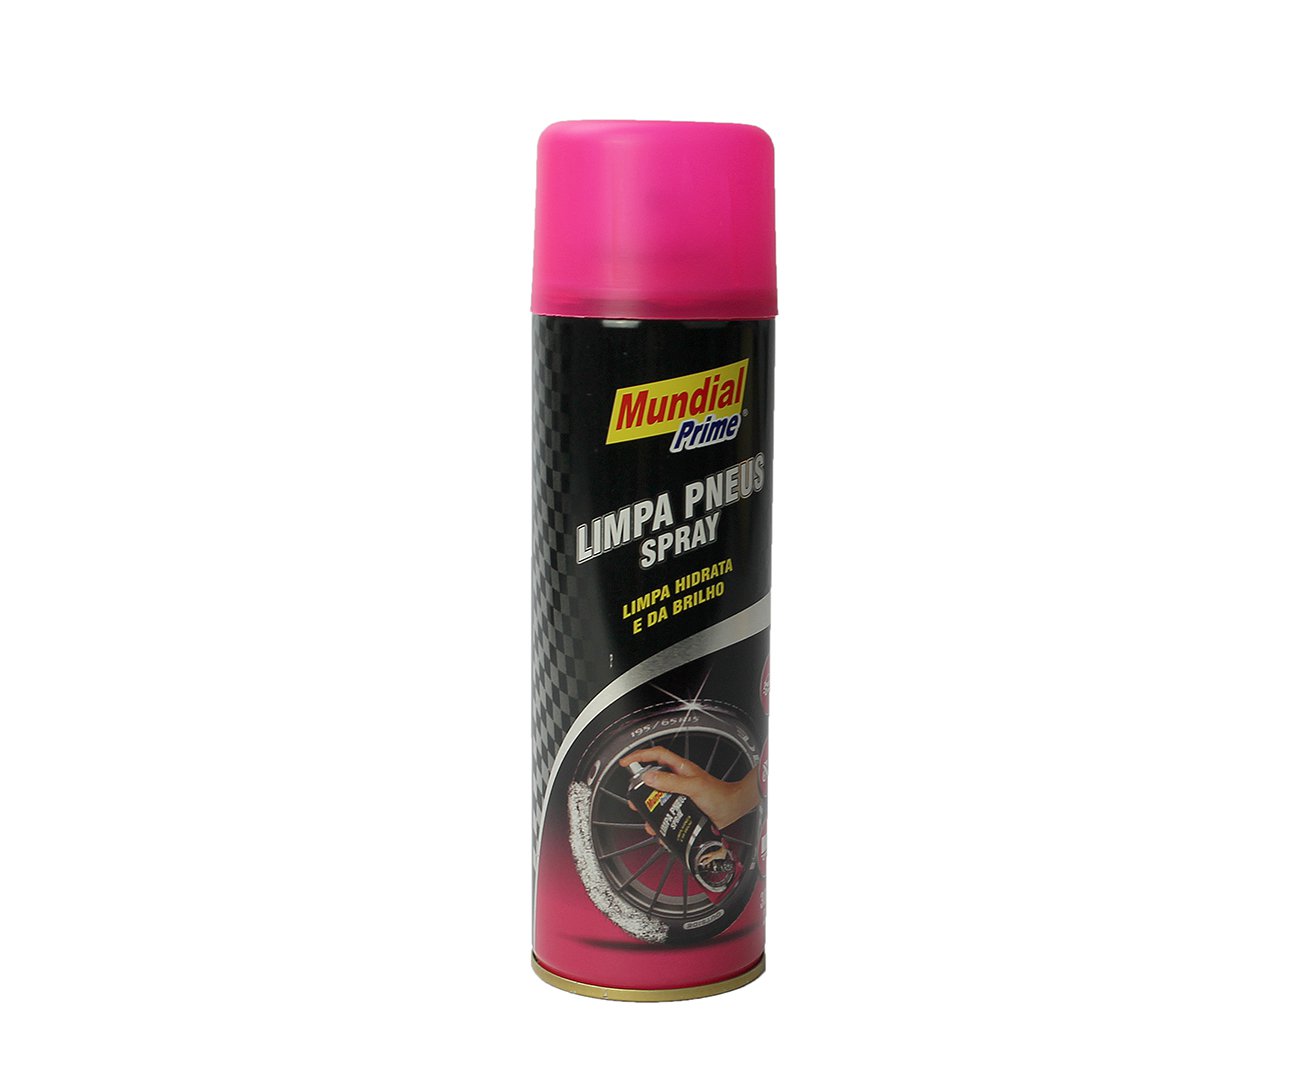 Limpa Pneus Spray 300ml - Mundial Prime